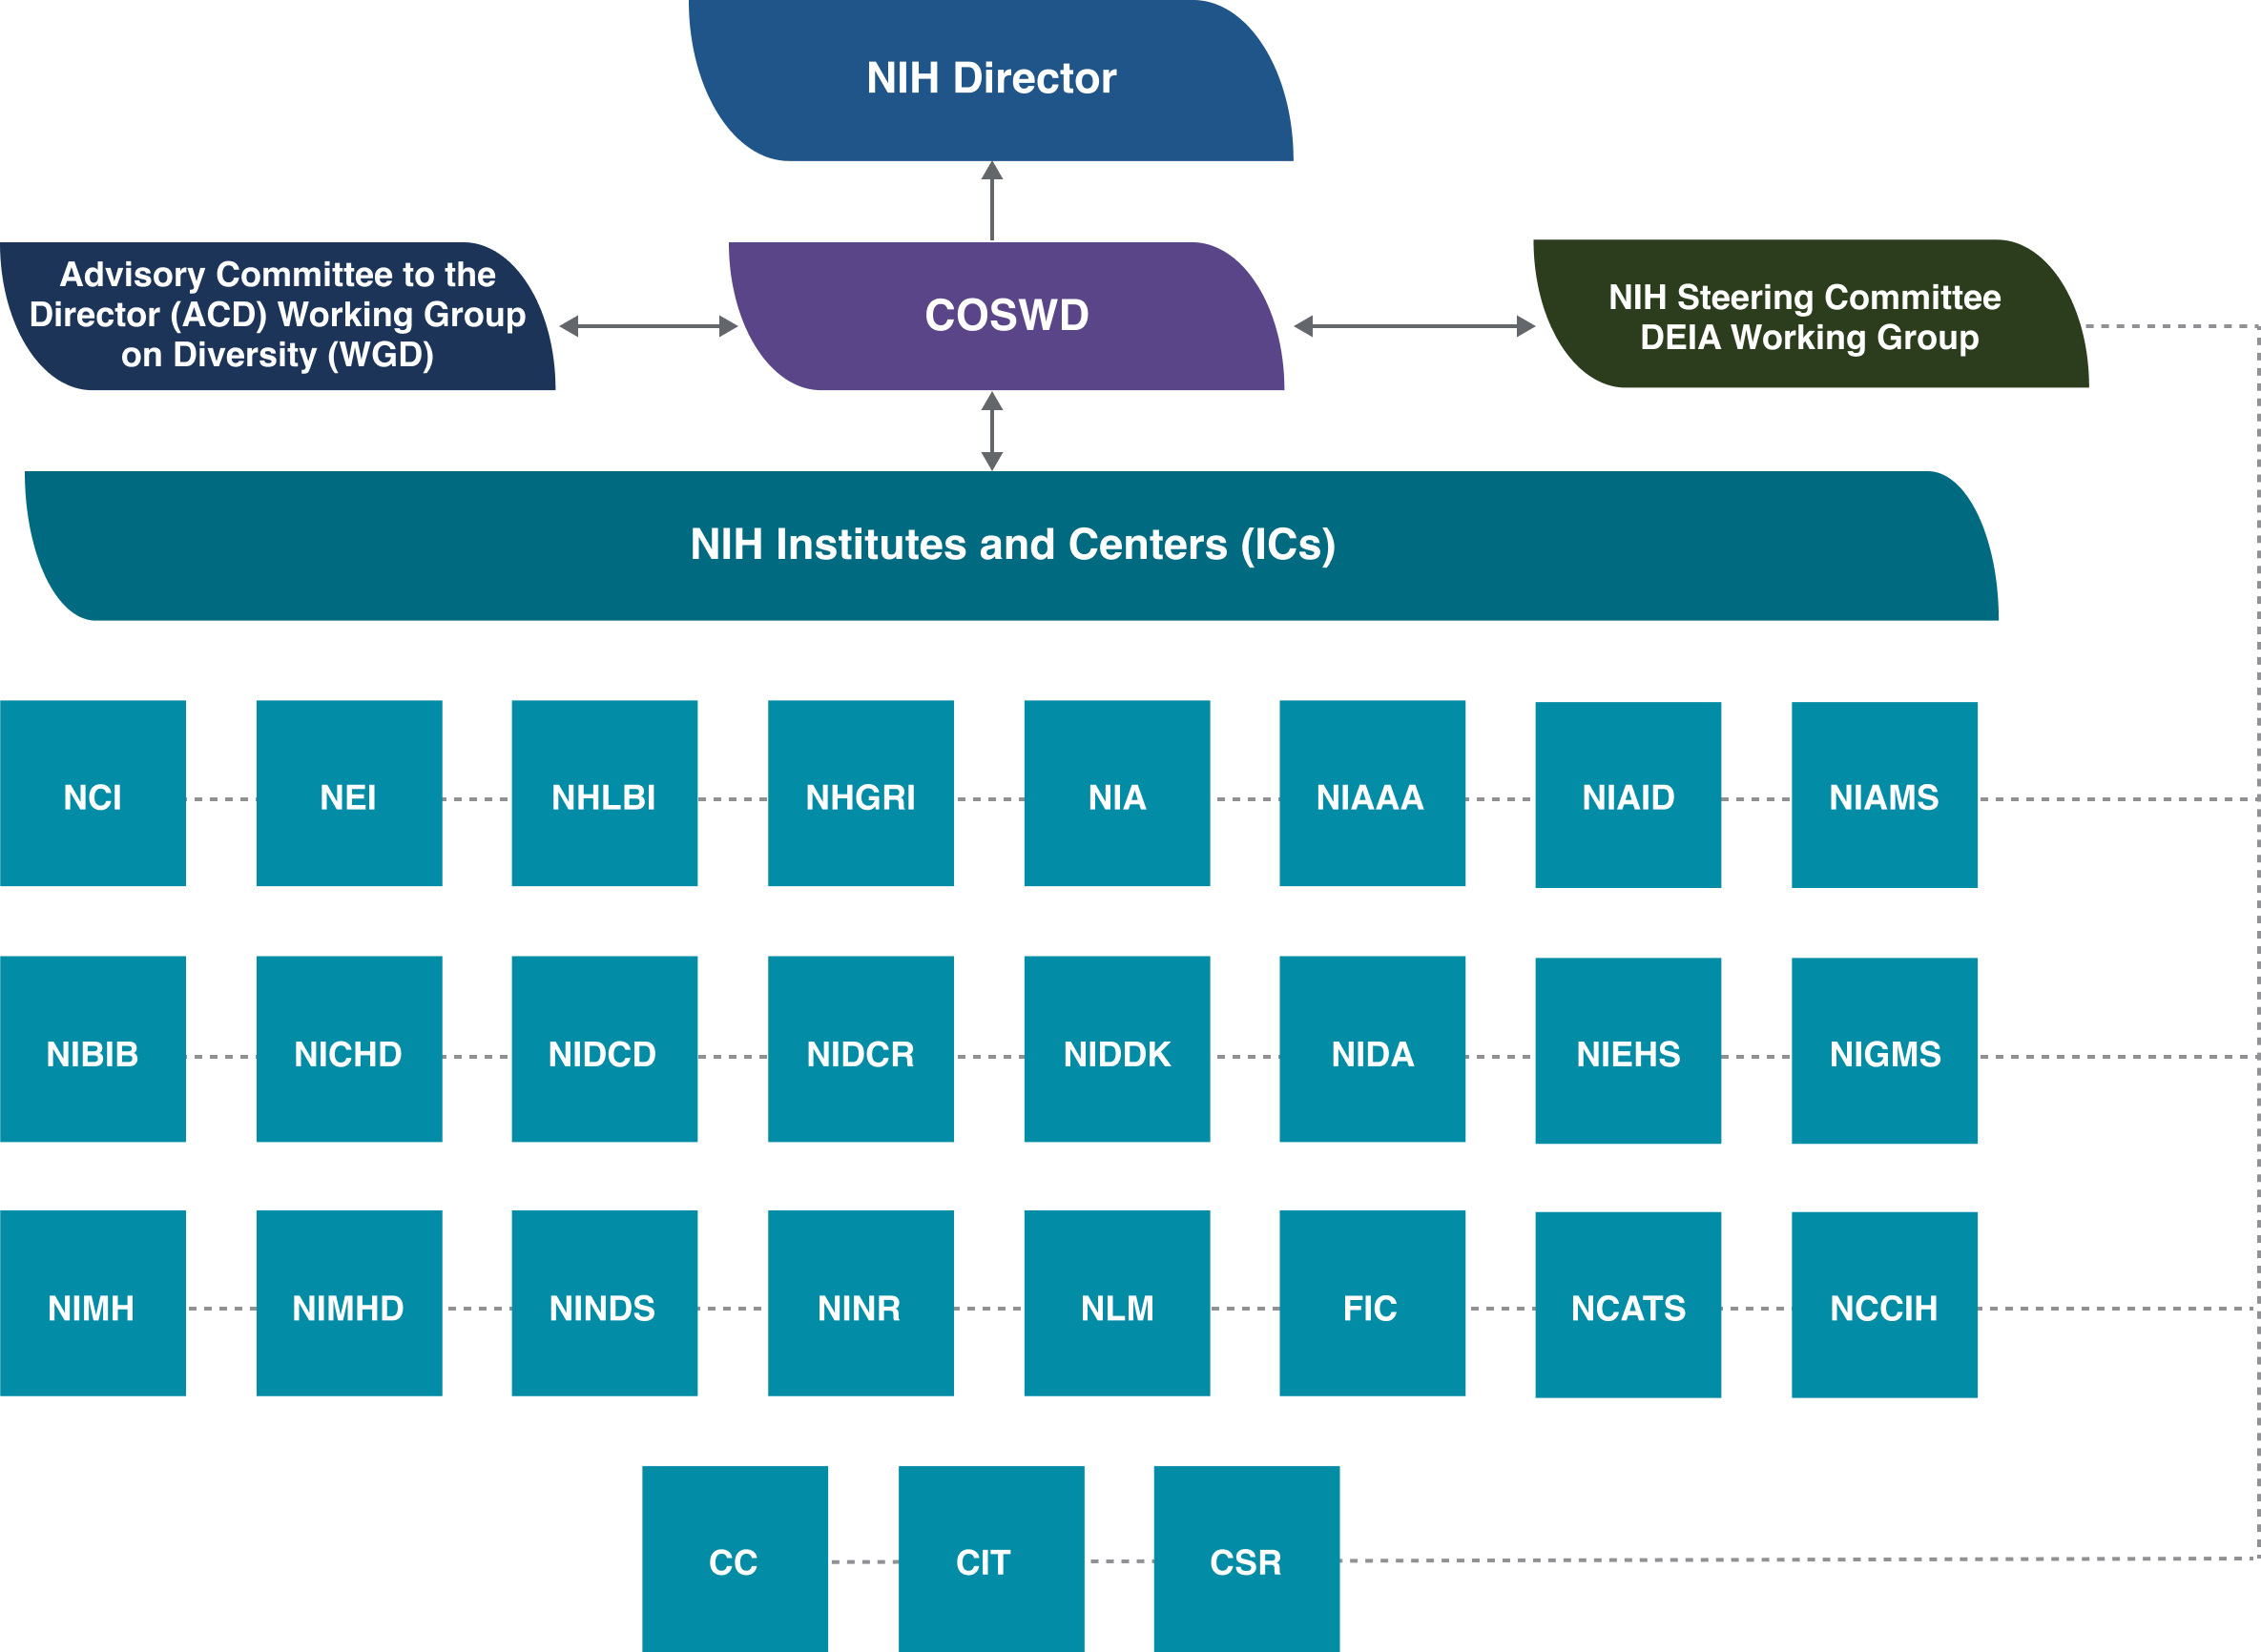 NIH organization chart showing the components of NIH, with the NIH Director; followed by Advisory Committee to the Director (ACD) Working Group on Diversity (WGD), COSWD, and NIH Steering Committee DEIA Working Group; followed by the NIH Institutes and Centers (ICs), which include NCI, NEI, NHLBI, NHGRI, NIA, NIAAA, NIAID, NIAMS, NIBIB, NICHD, NIDCD, NIDCR, NIDDK, NIDA, NIEHS, NIGMS, NIMH, NIMHD, NINDS, NINR, NLM, FIC, NCATS, NCCIH, CC, CIT, and CSR.